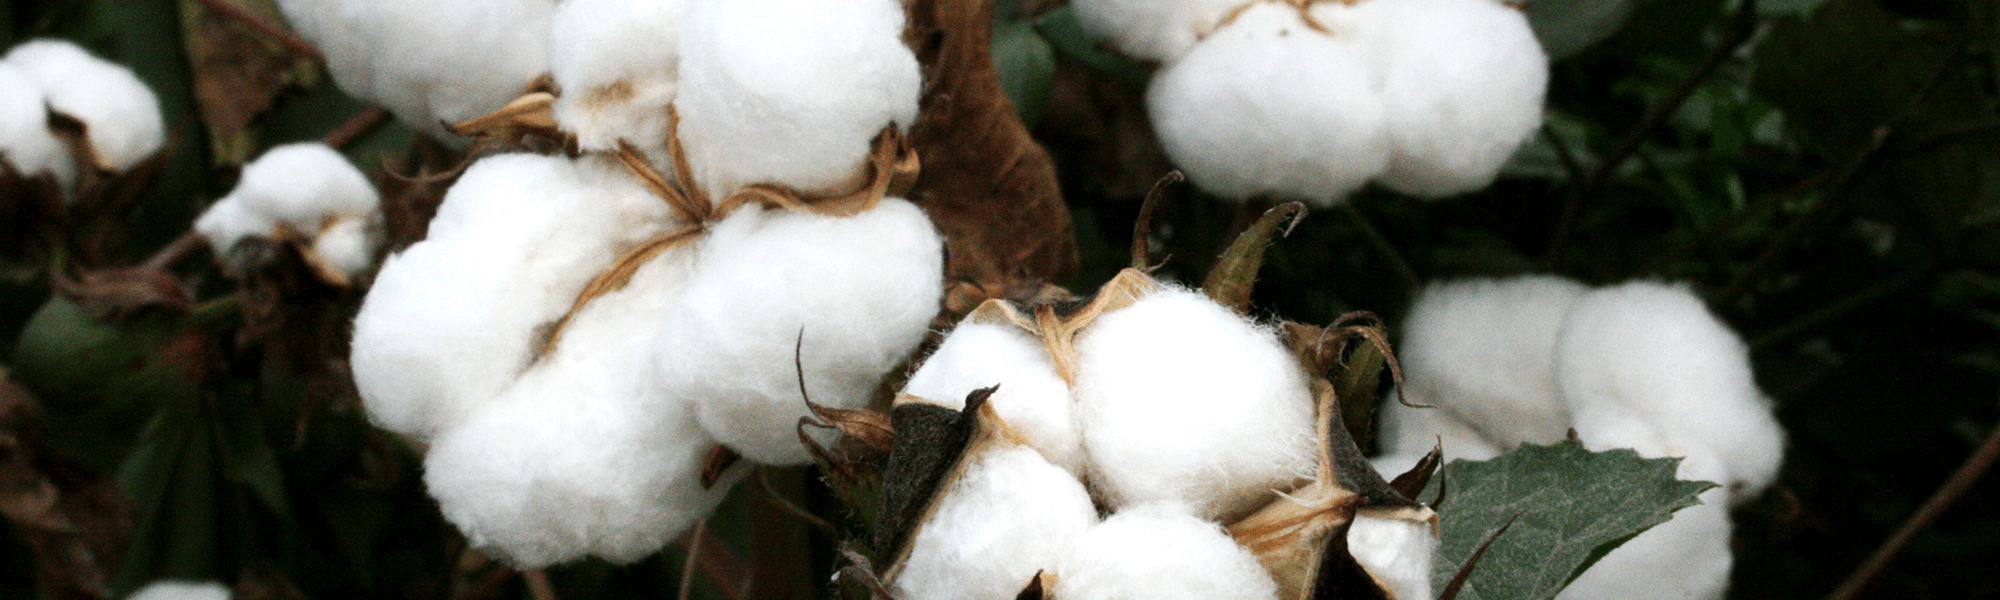 Photograph of Cotton Flower